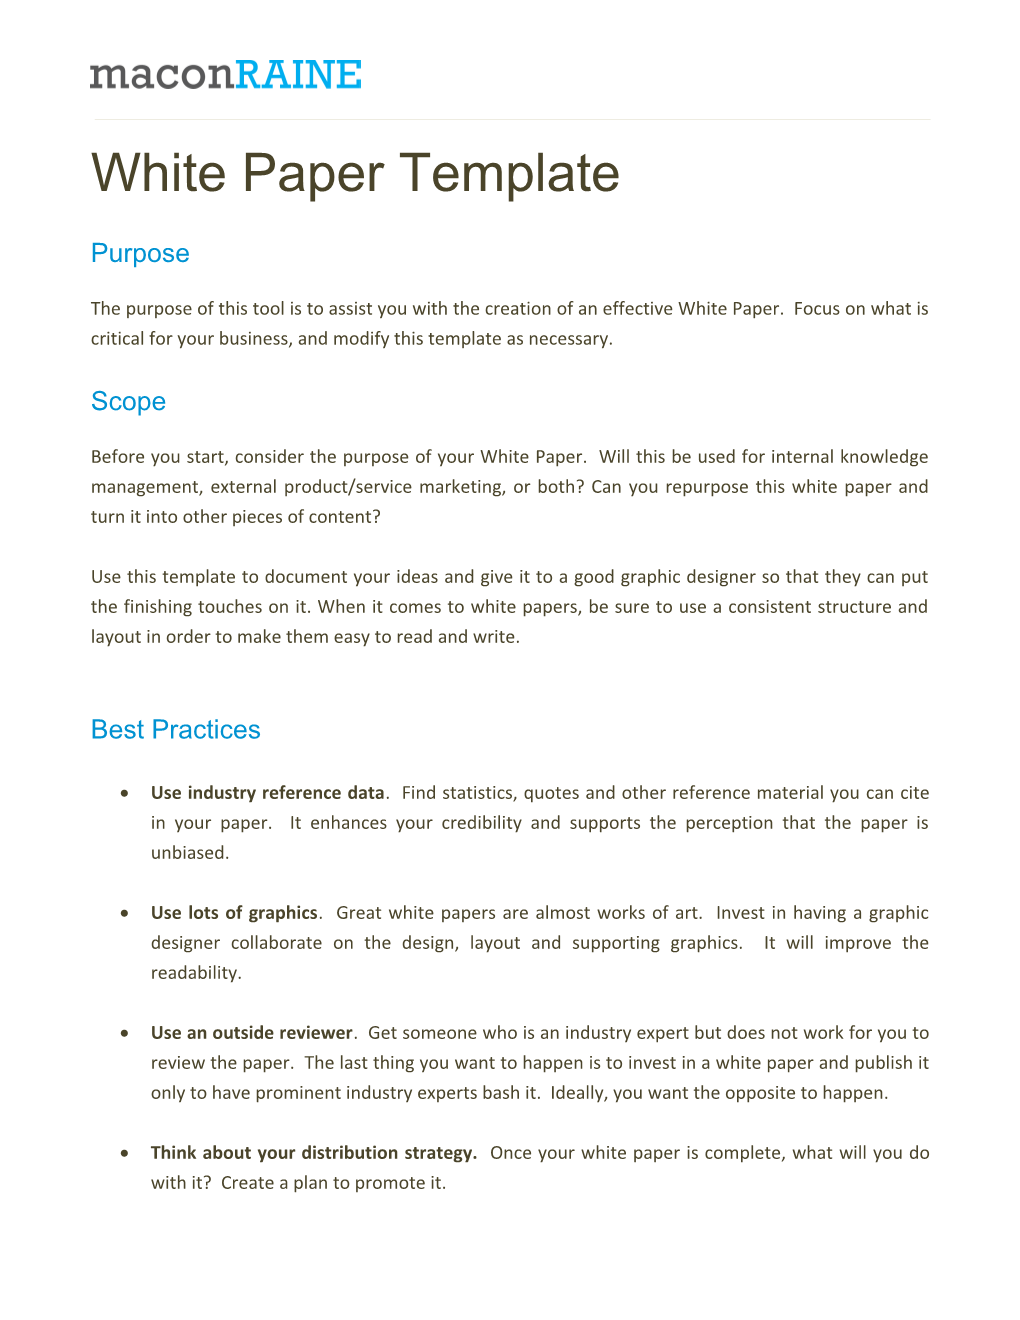 White Paper Template s1